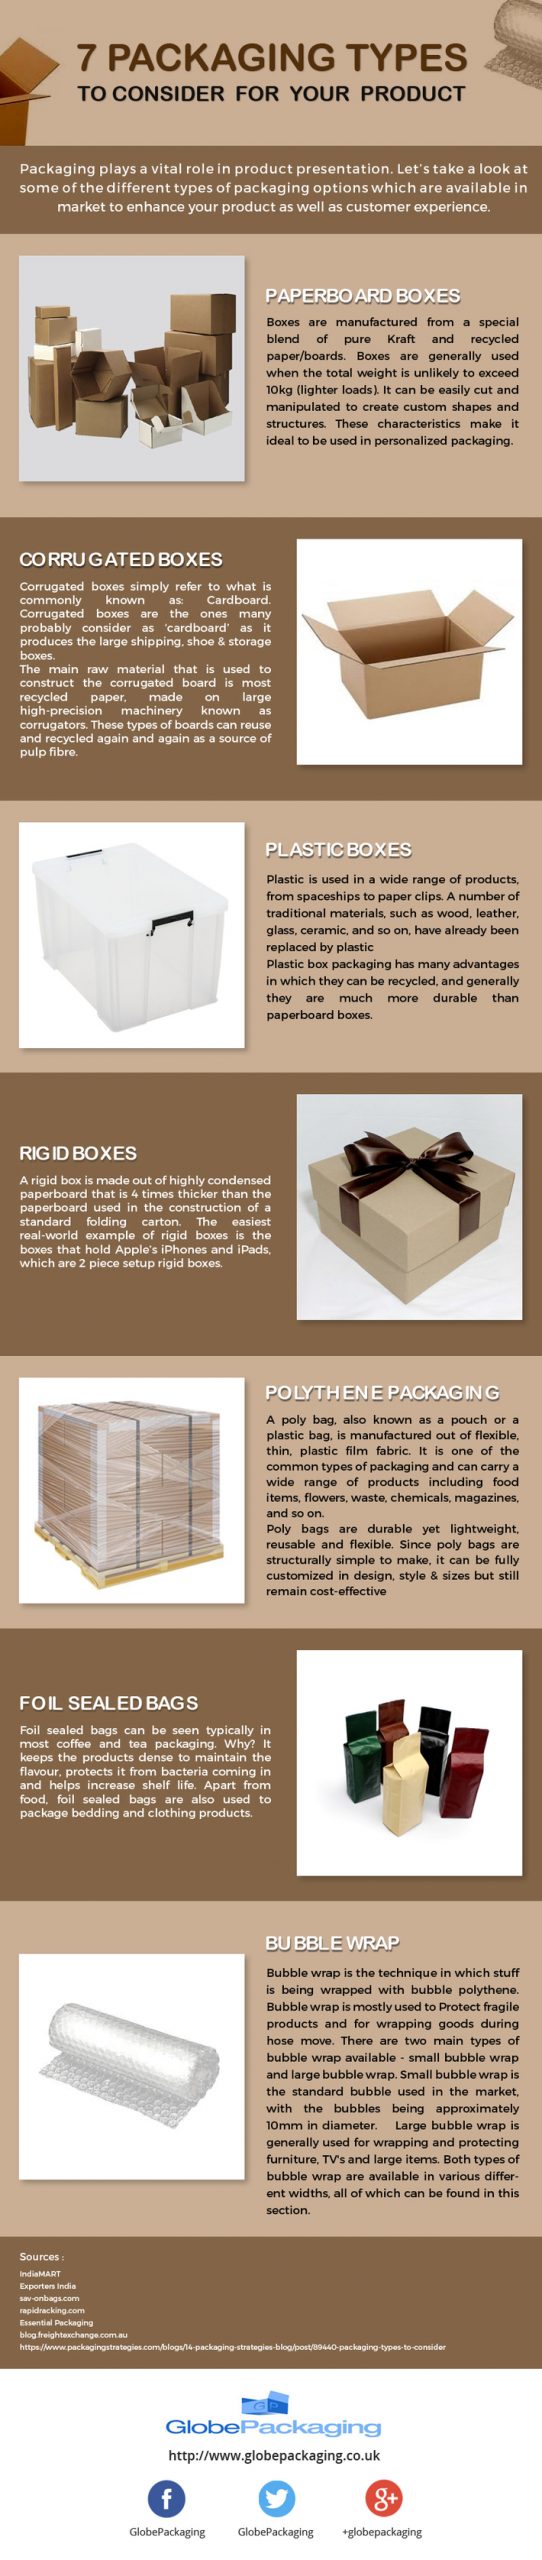 infographic describing different packaging materials